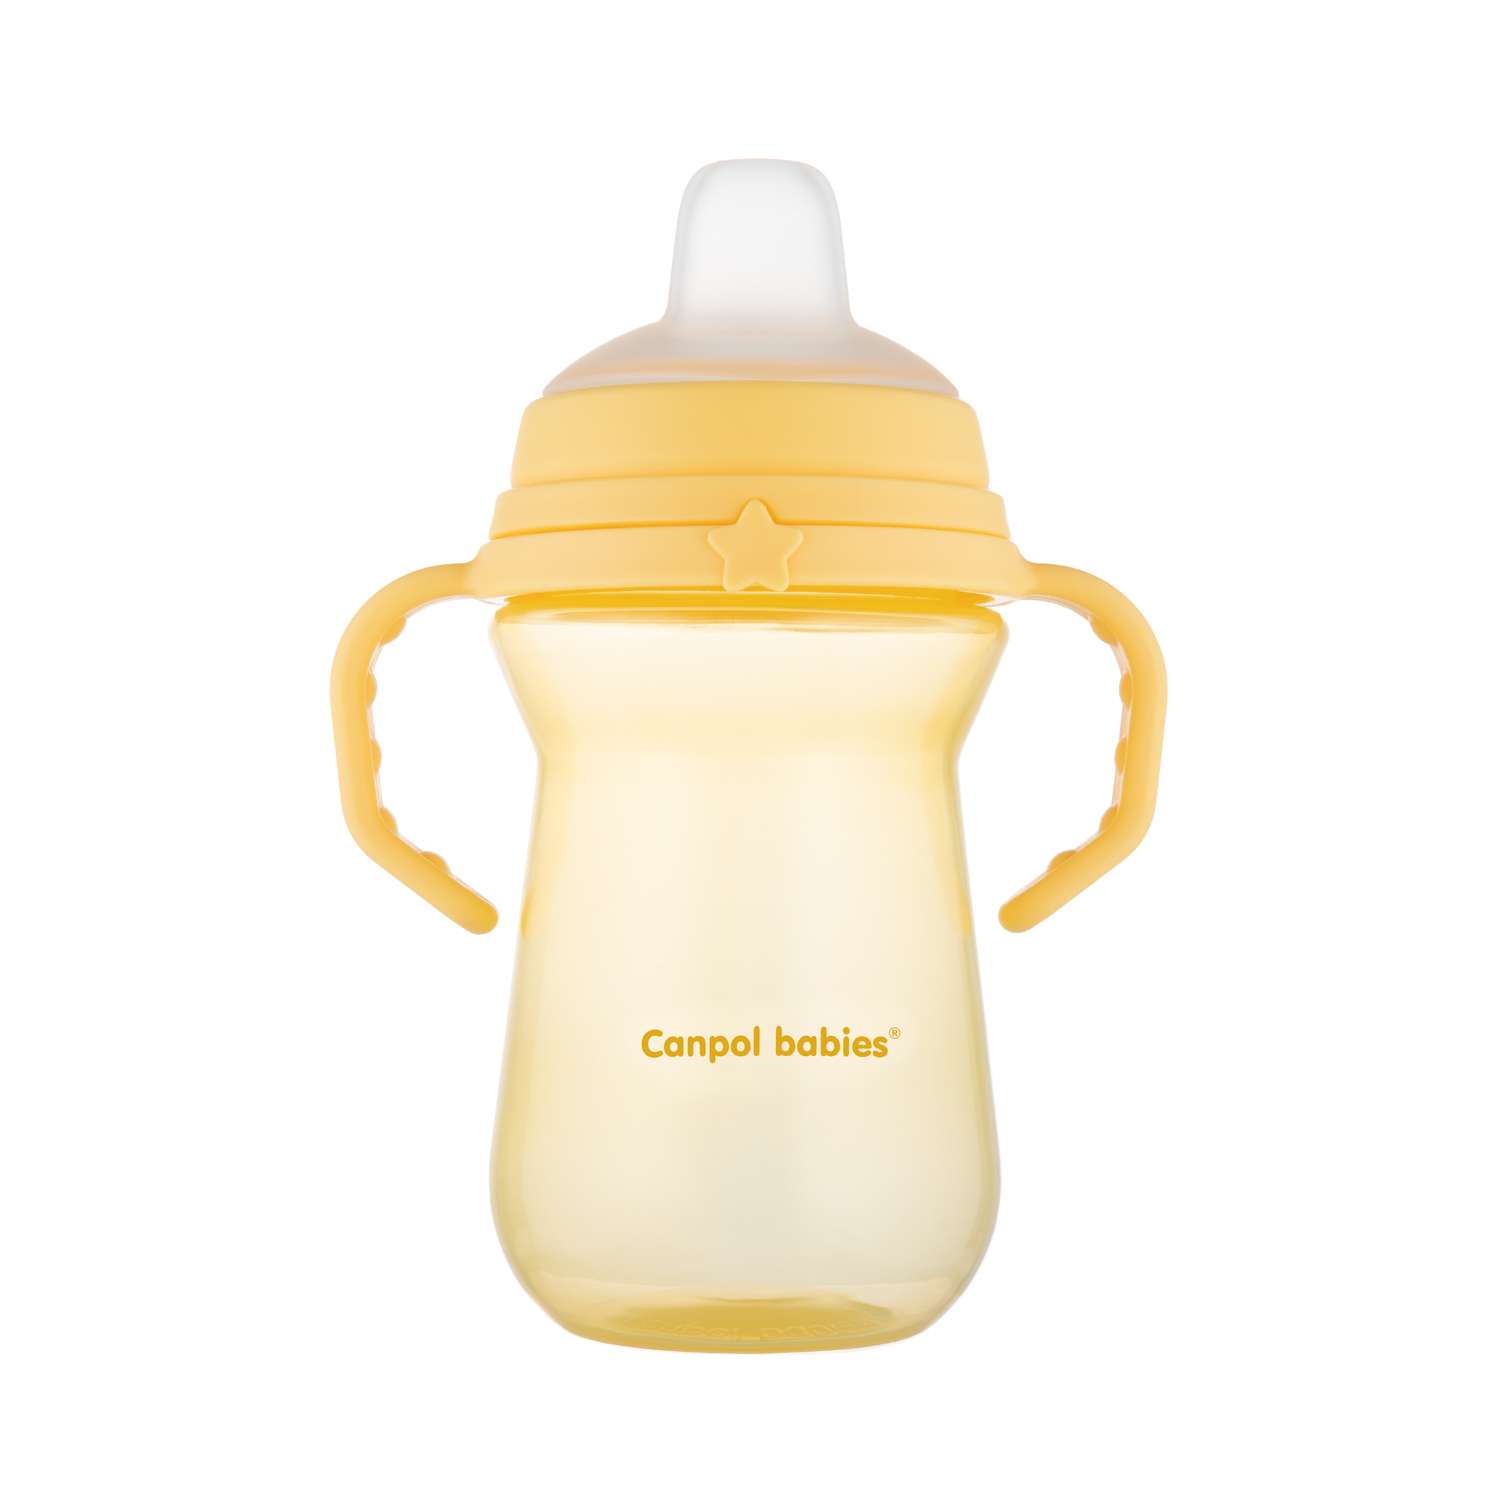 Canpol babies cup